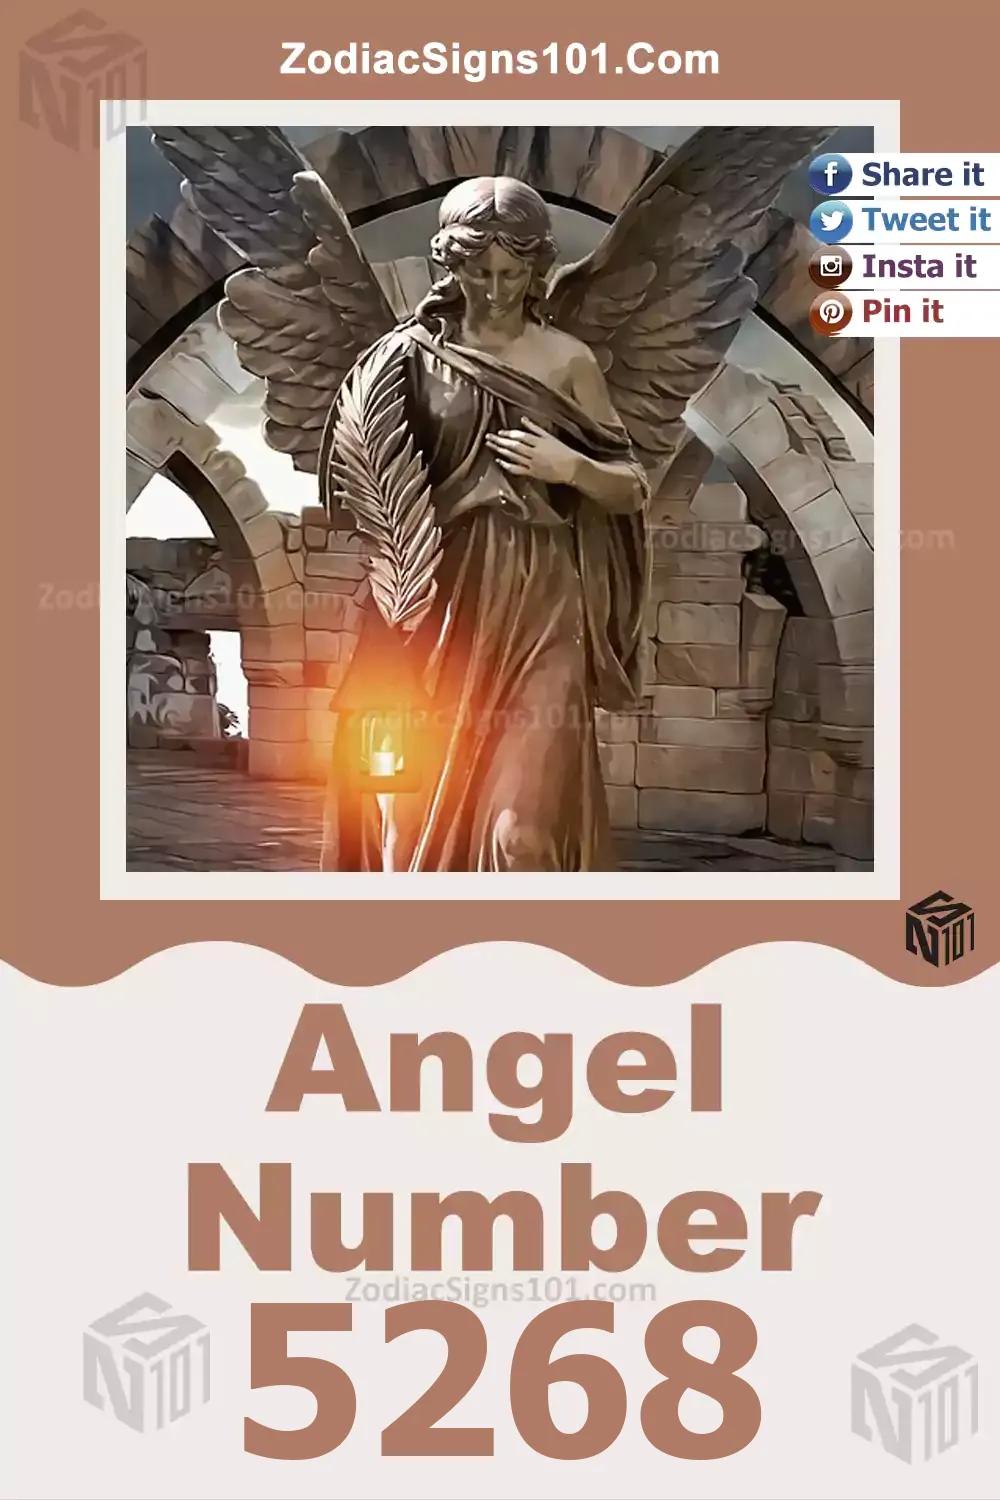 5268-Angel-Number-Meaning.jpg